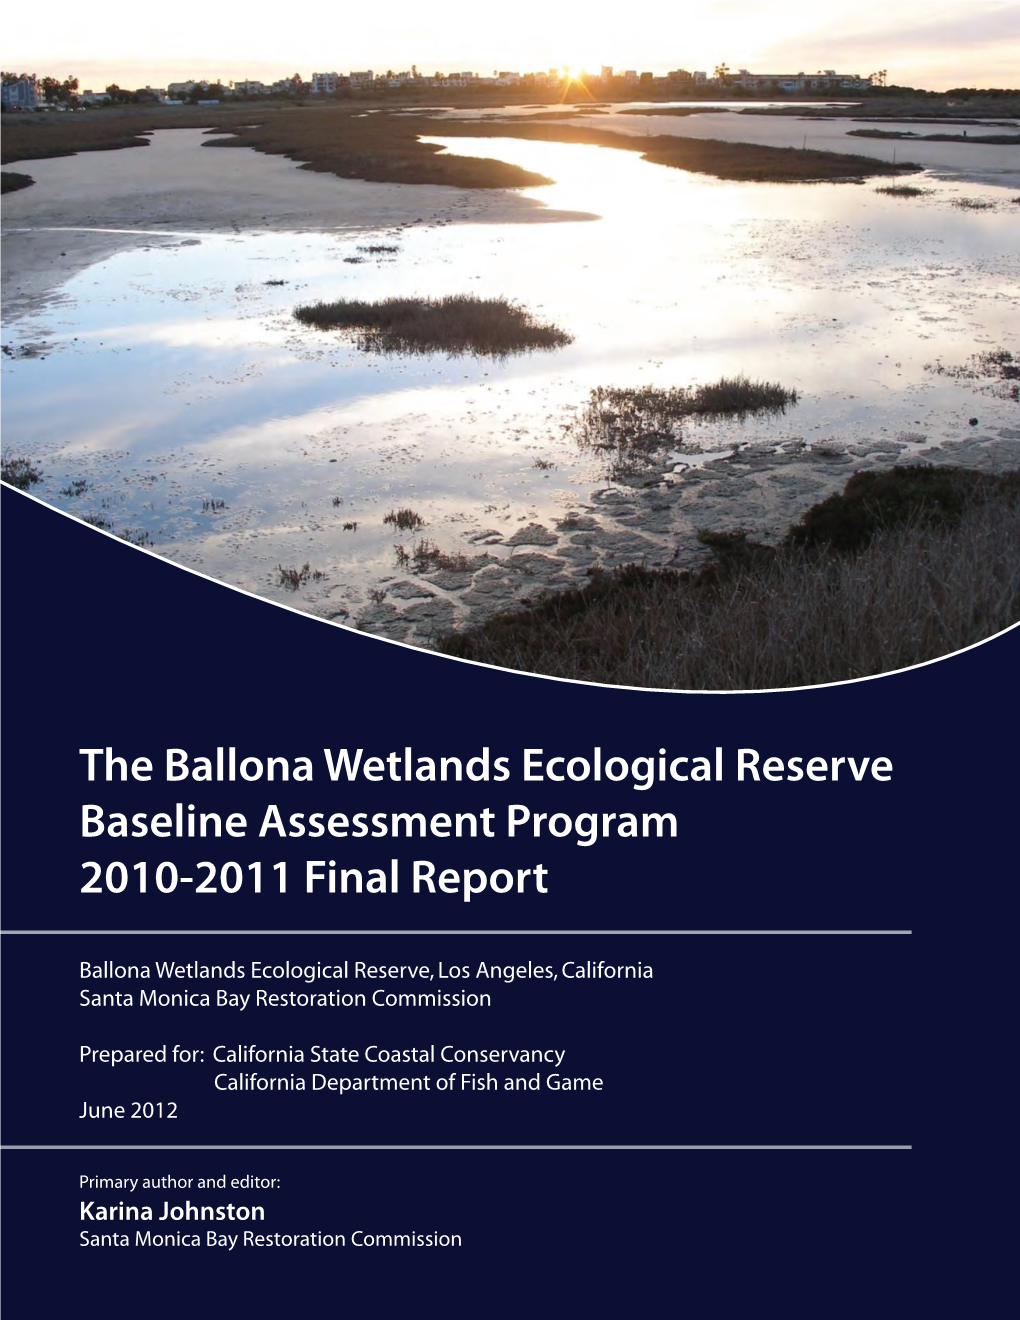 The Ballona Wetlands Ecological Reserve Baseline Assessment Program 2010-2011 Final Report